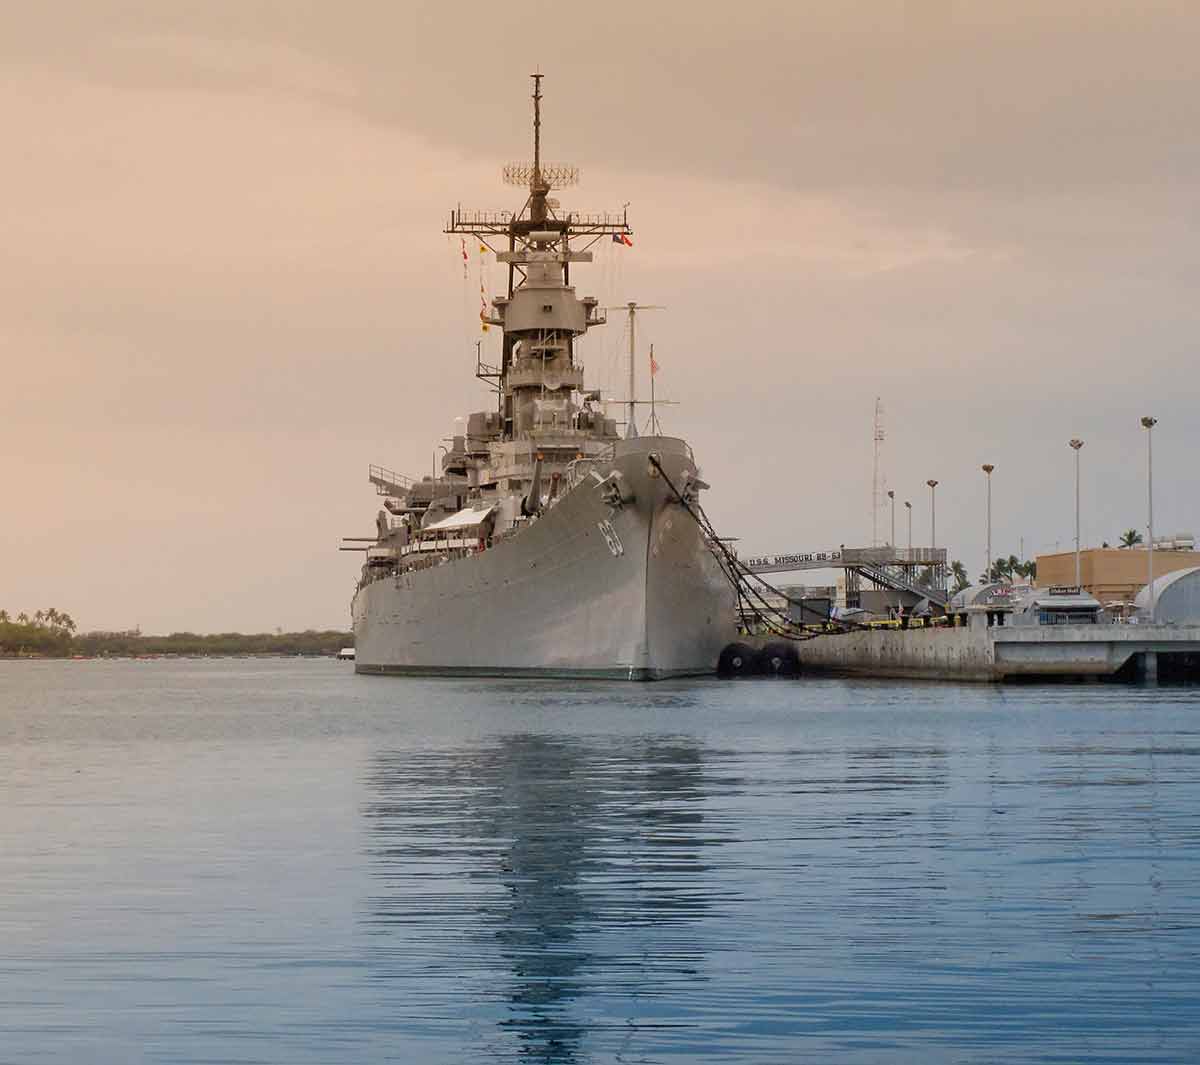 national parks of hawaii Battleship USS Missouri at dusk